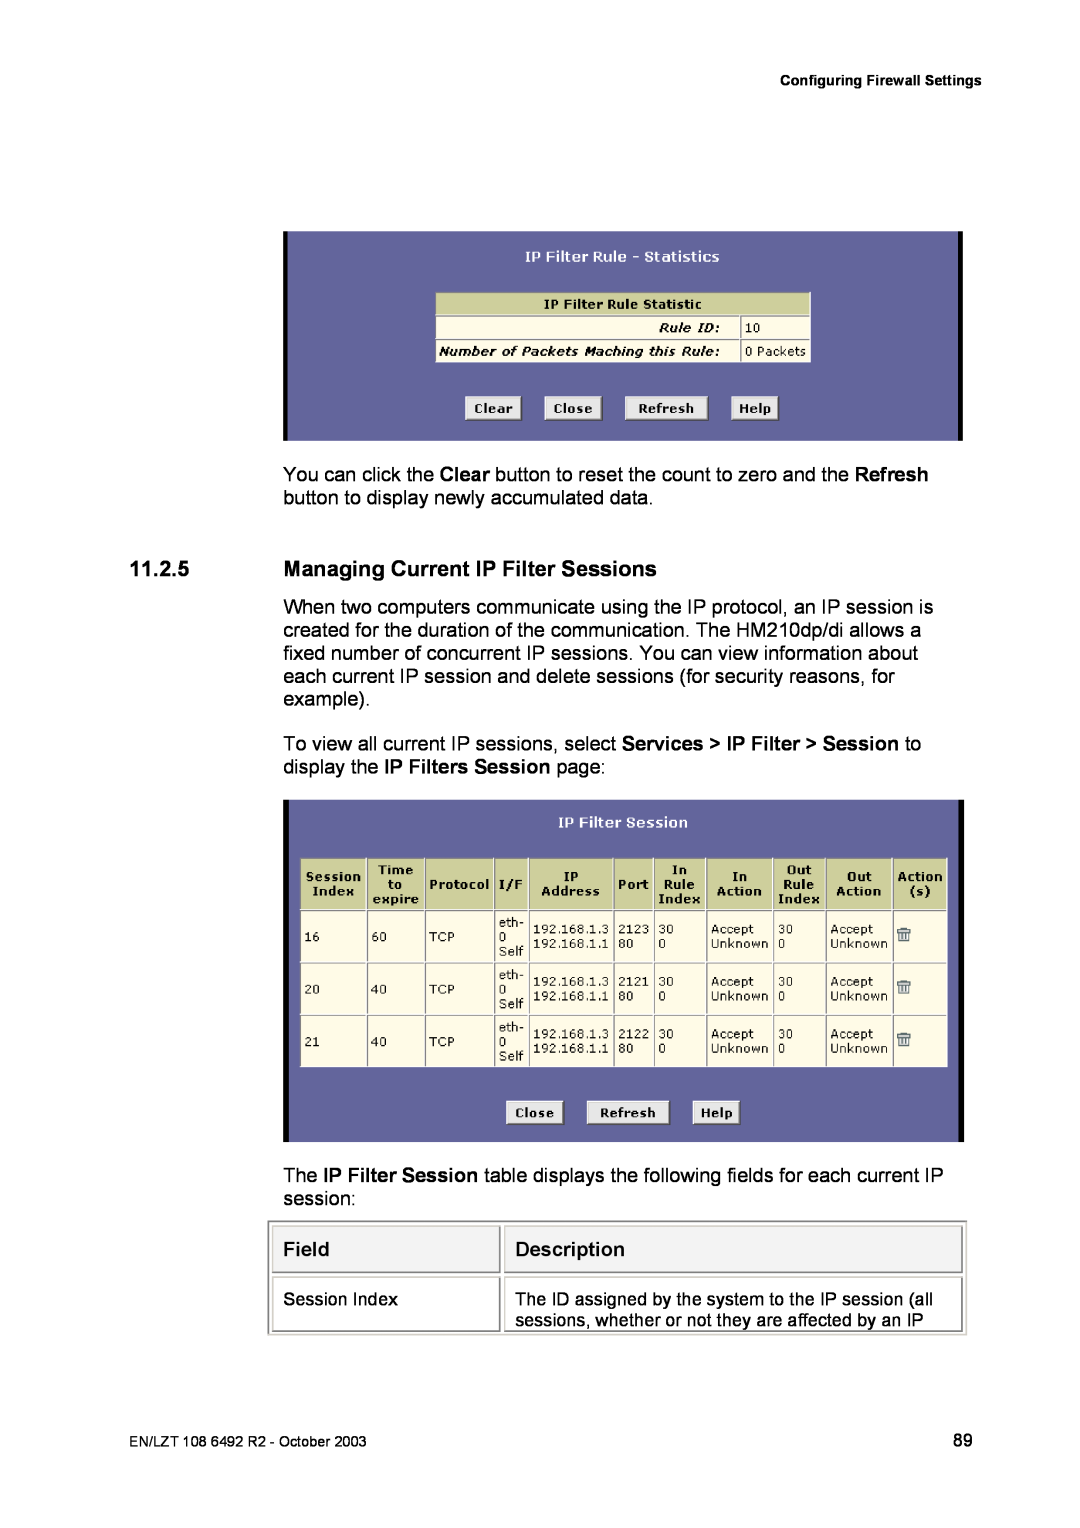 Garmin HM210DP/DI manual Managing Current IP Filter Sessions, Field, Description, Session Index 